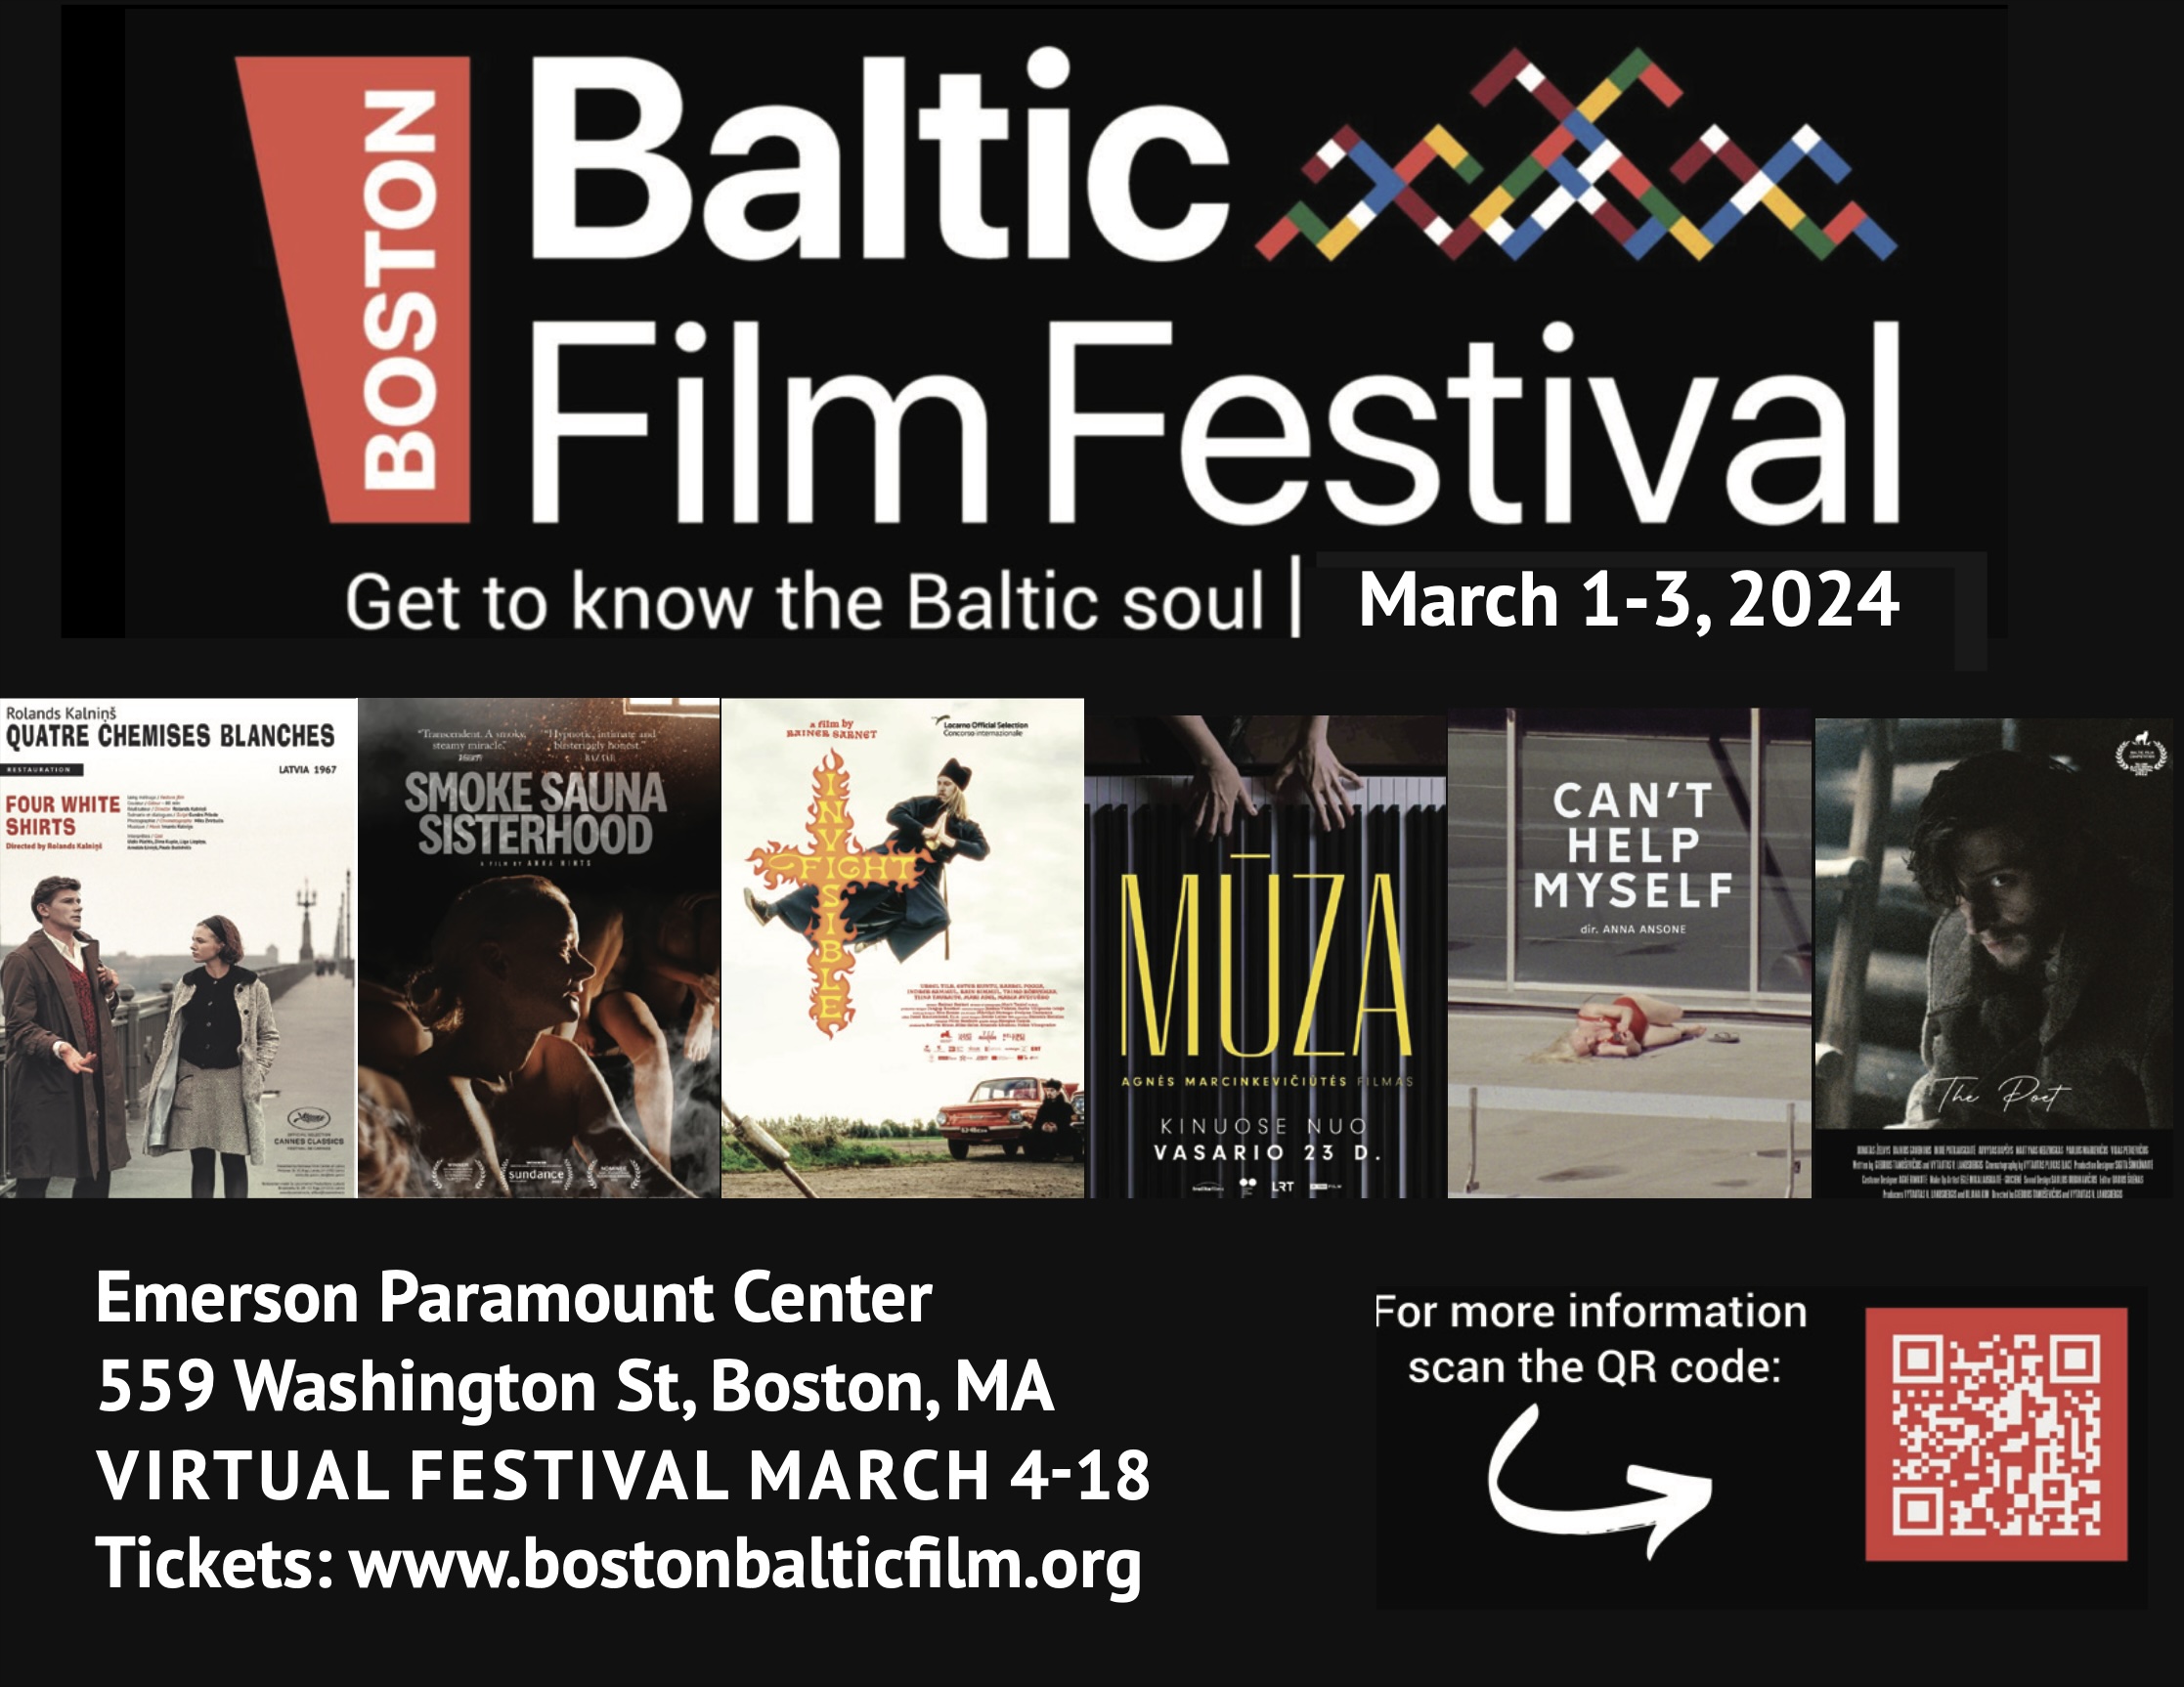 The marketing poster for the Boston Baltic Film Festival.